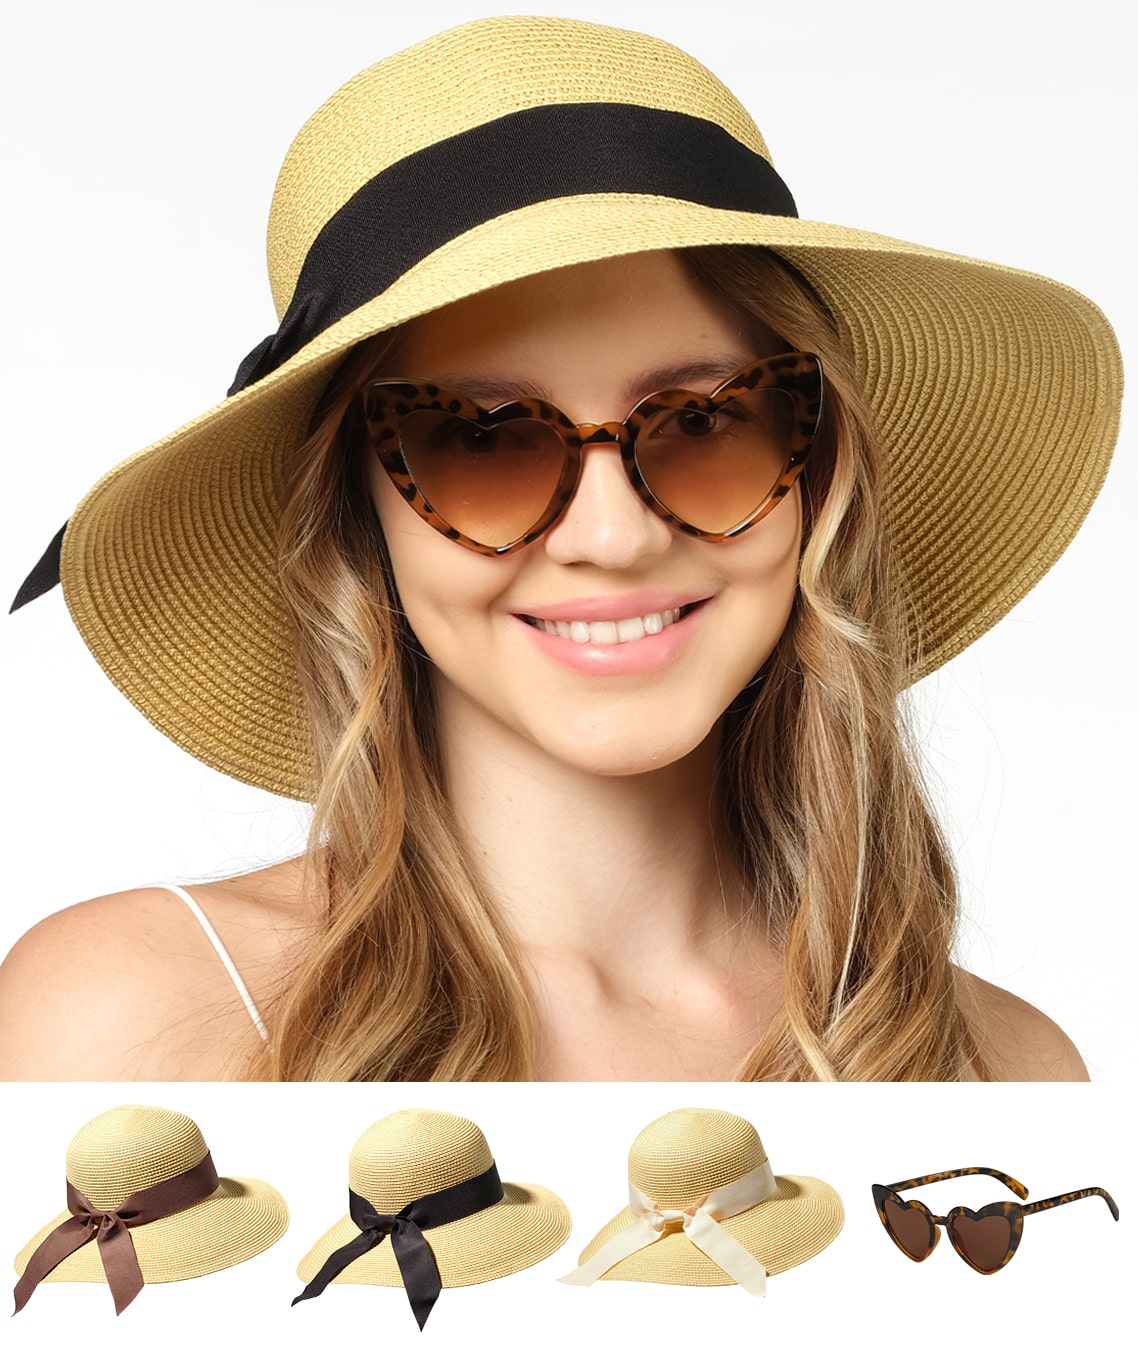 Sand Panama straw beach hats for women-Packable Sun Hats- Funcredible